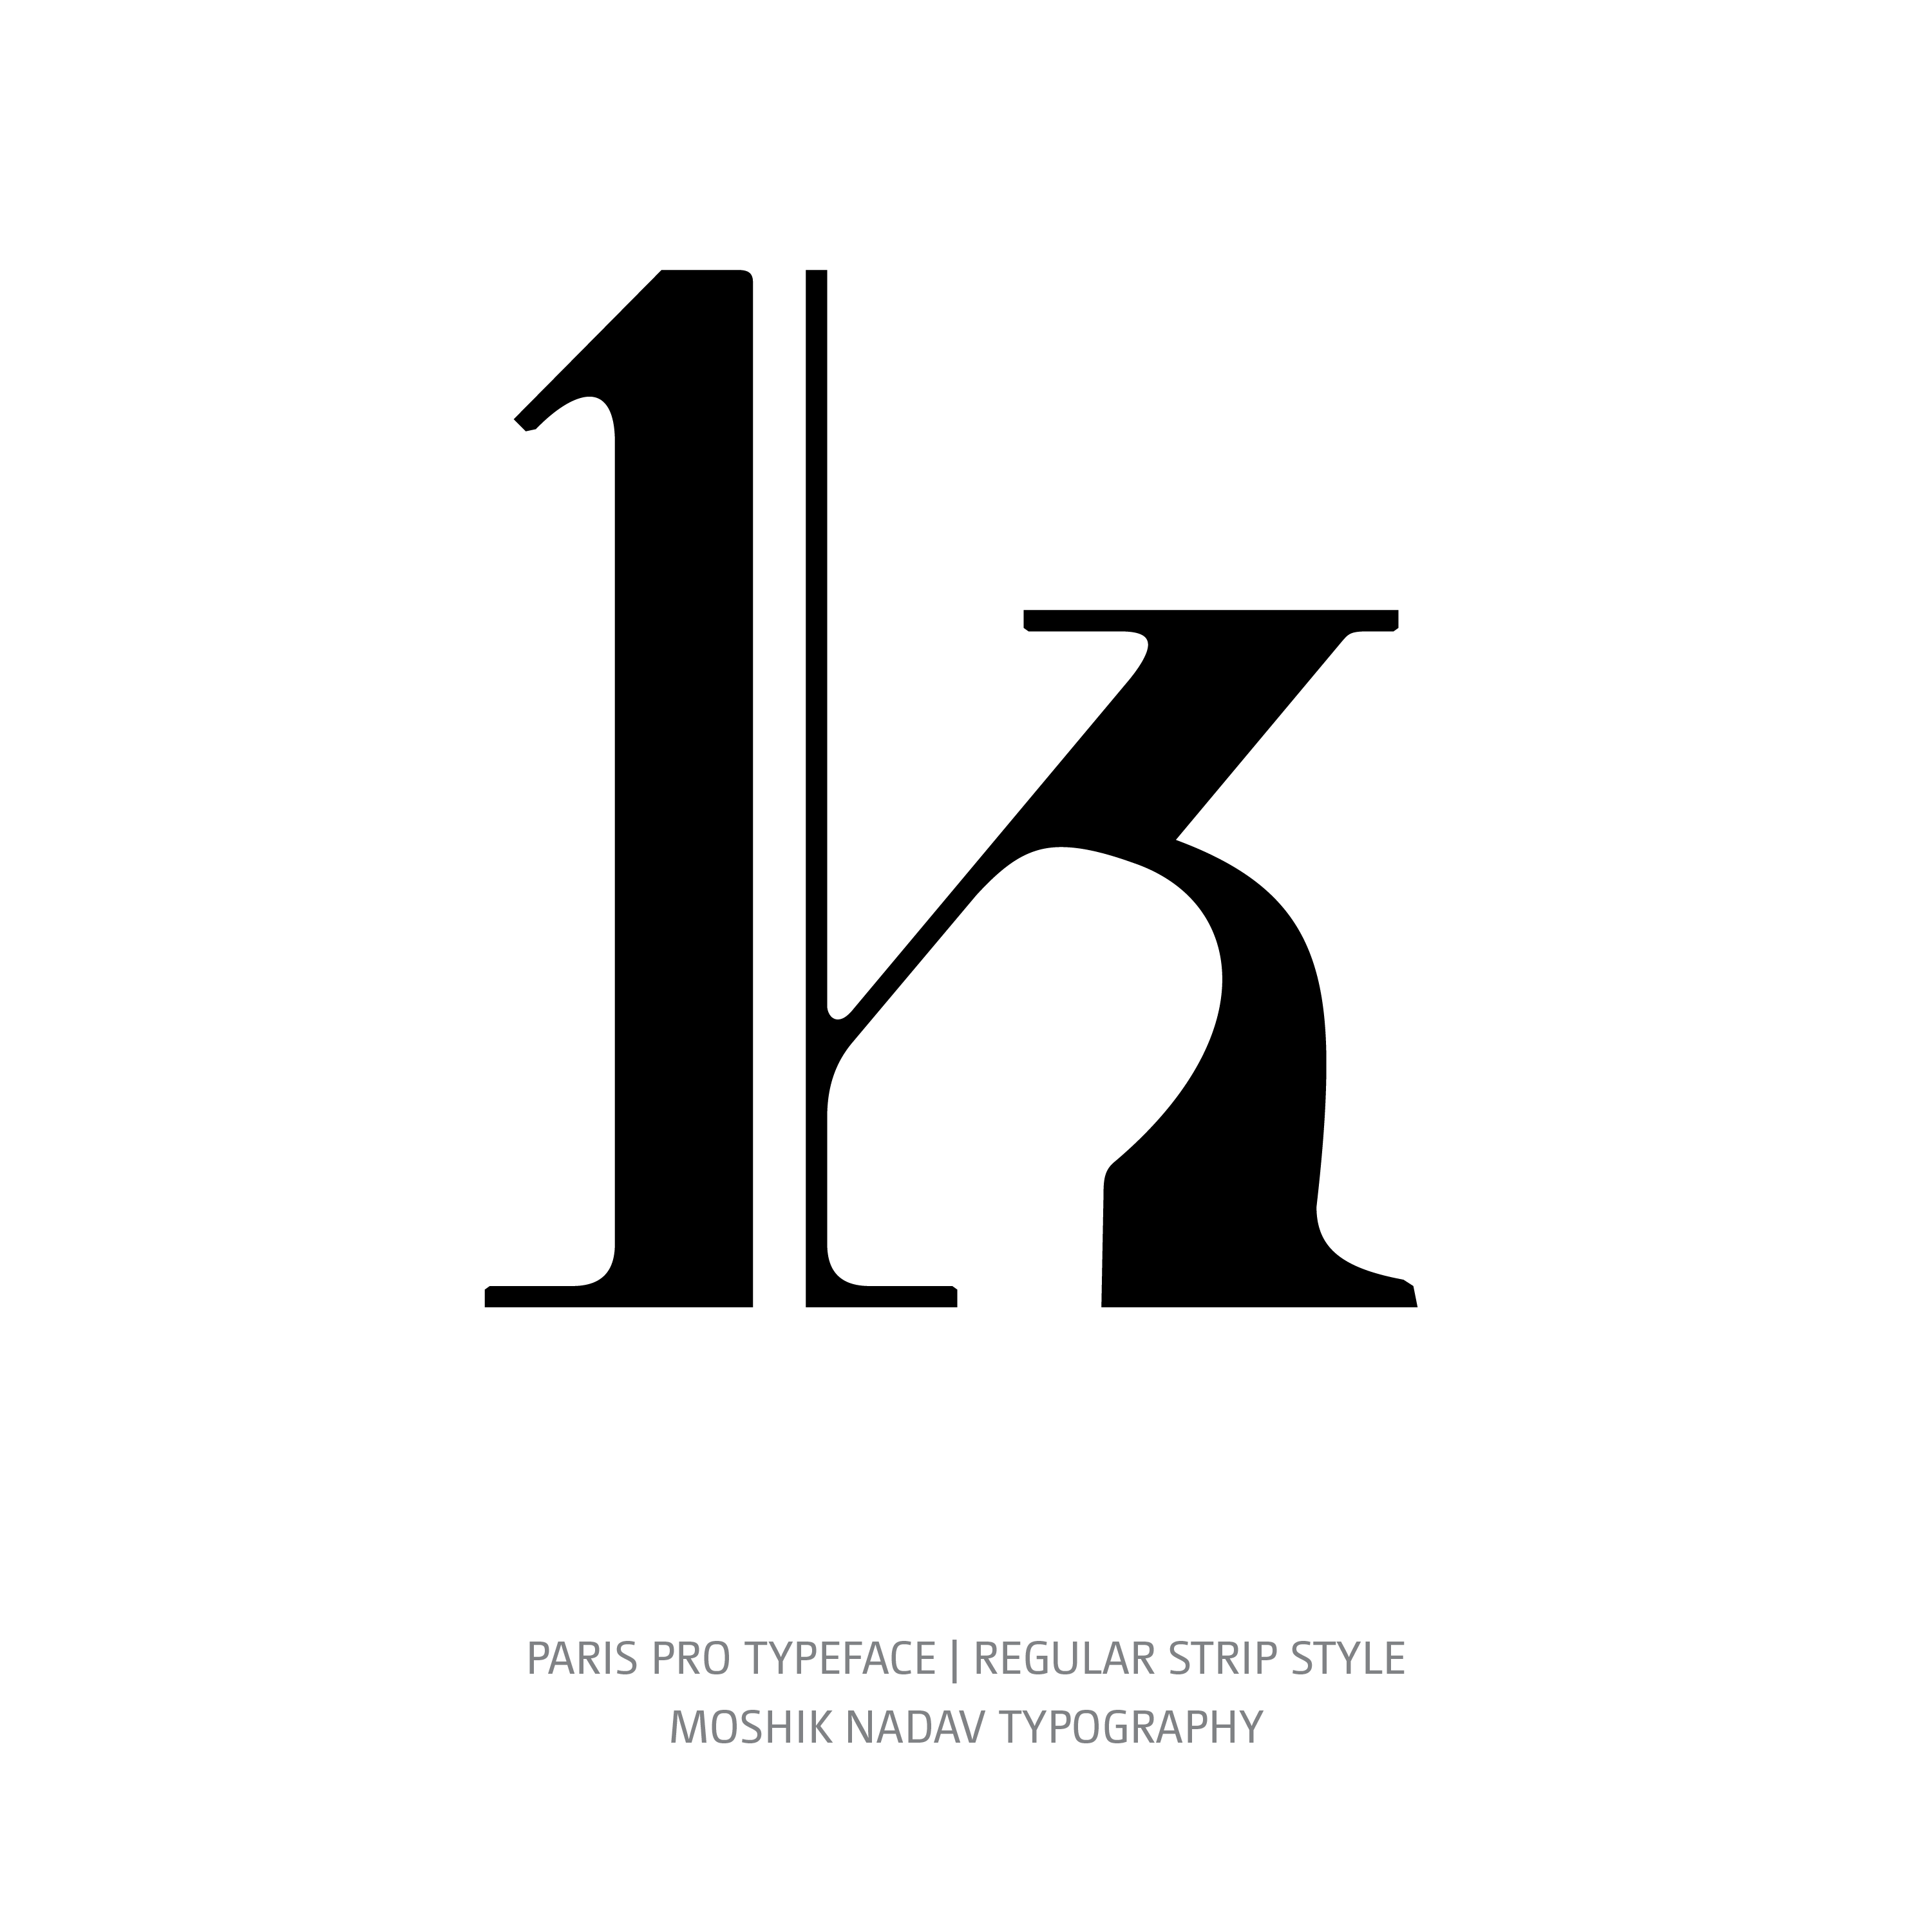 Paris Pro Typeface Regular Strip k